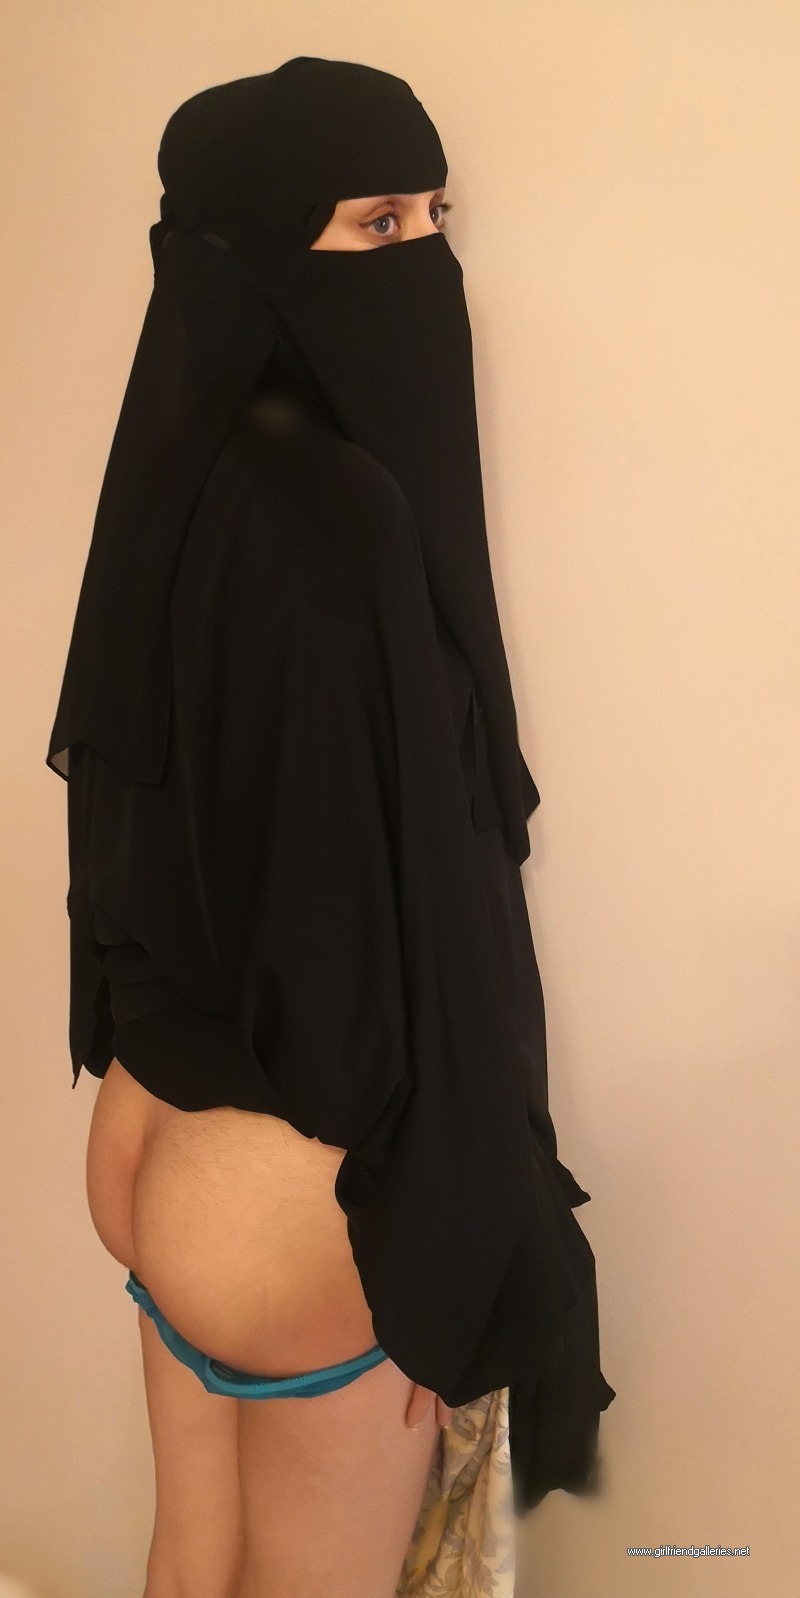 My Arabin hijab pussy